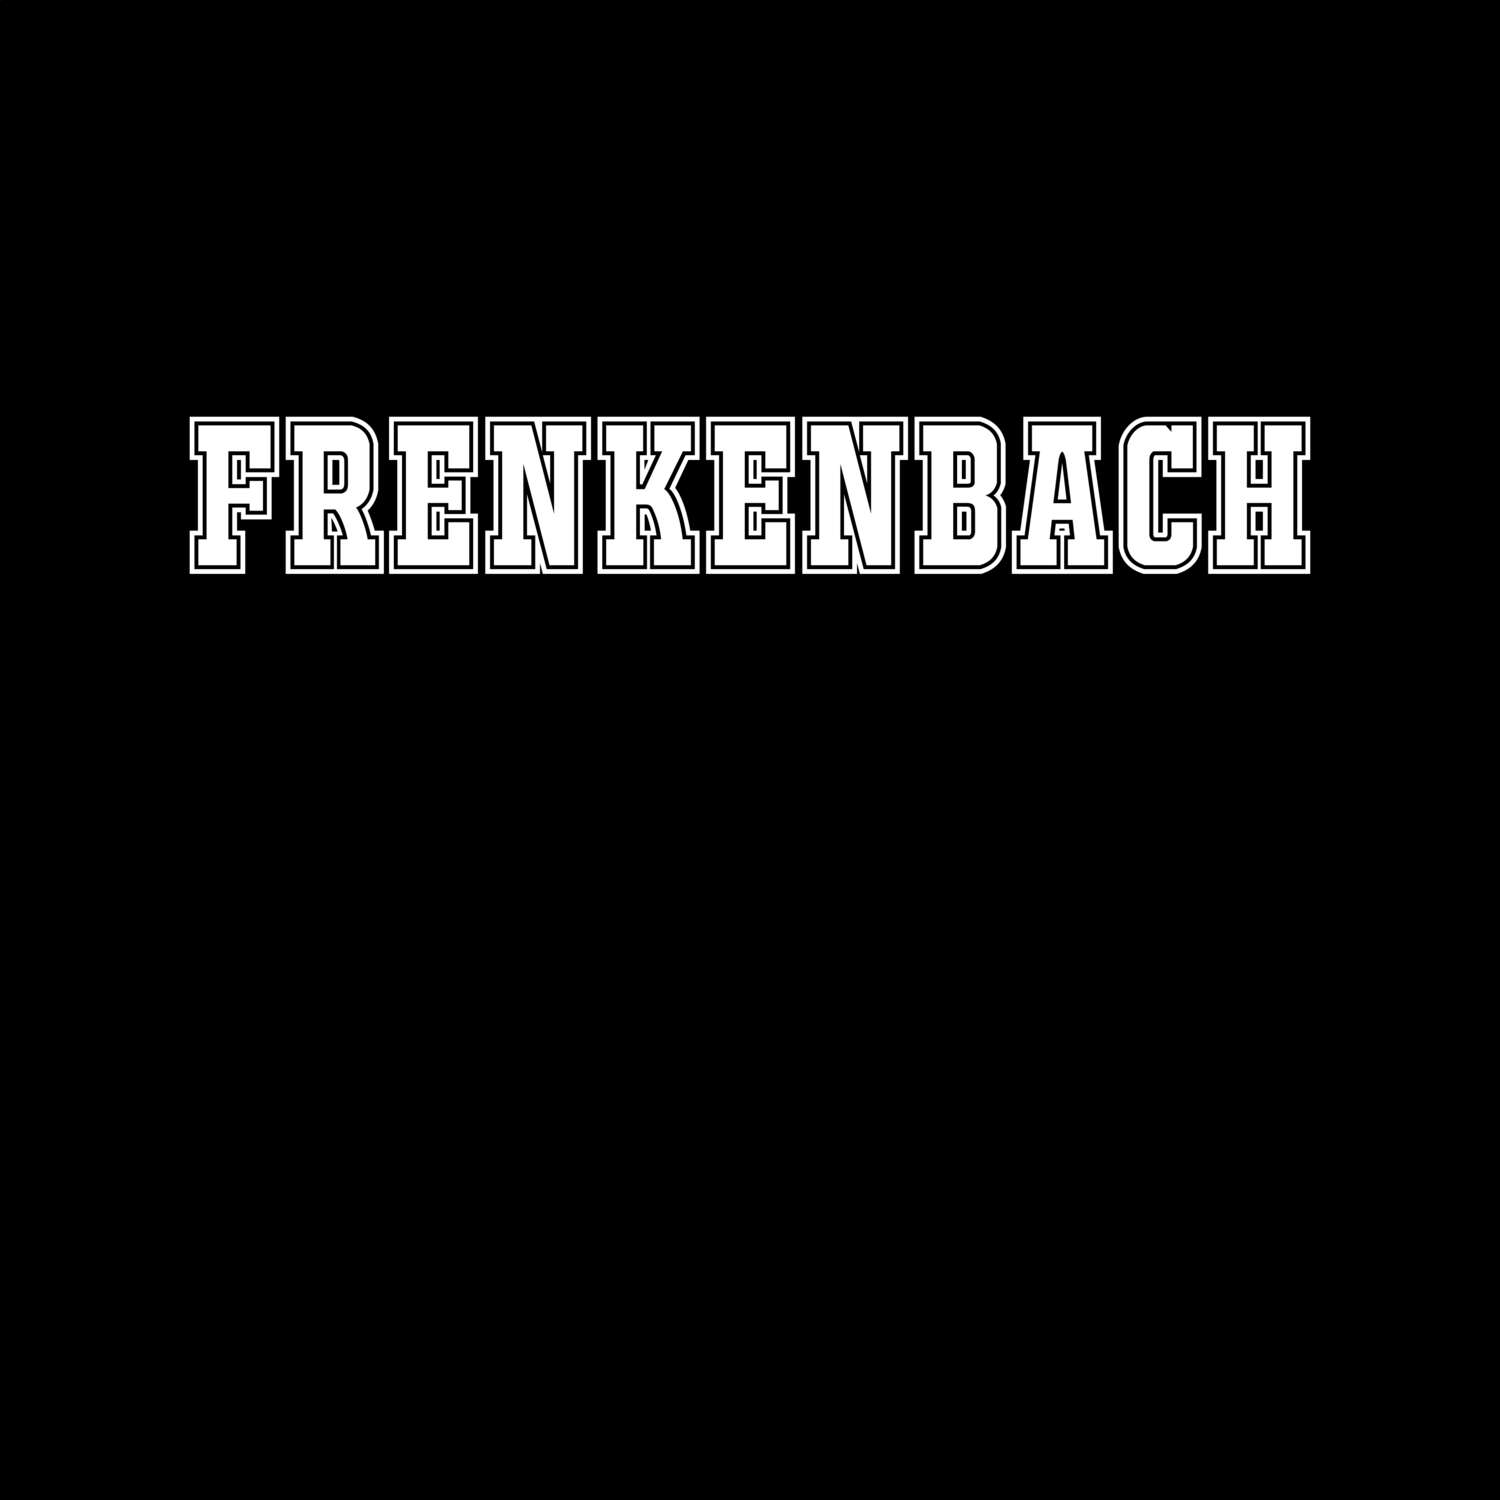 Frenkenbach T-Shirt »Classic«